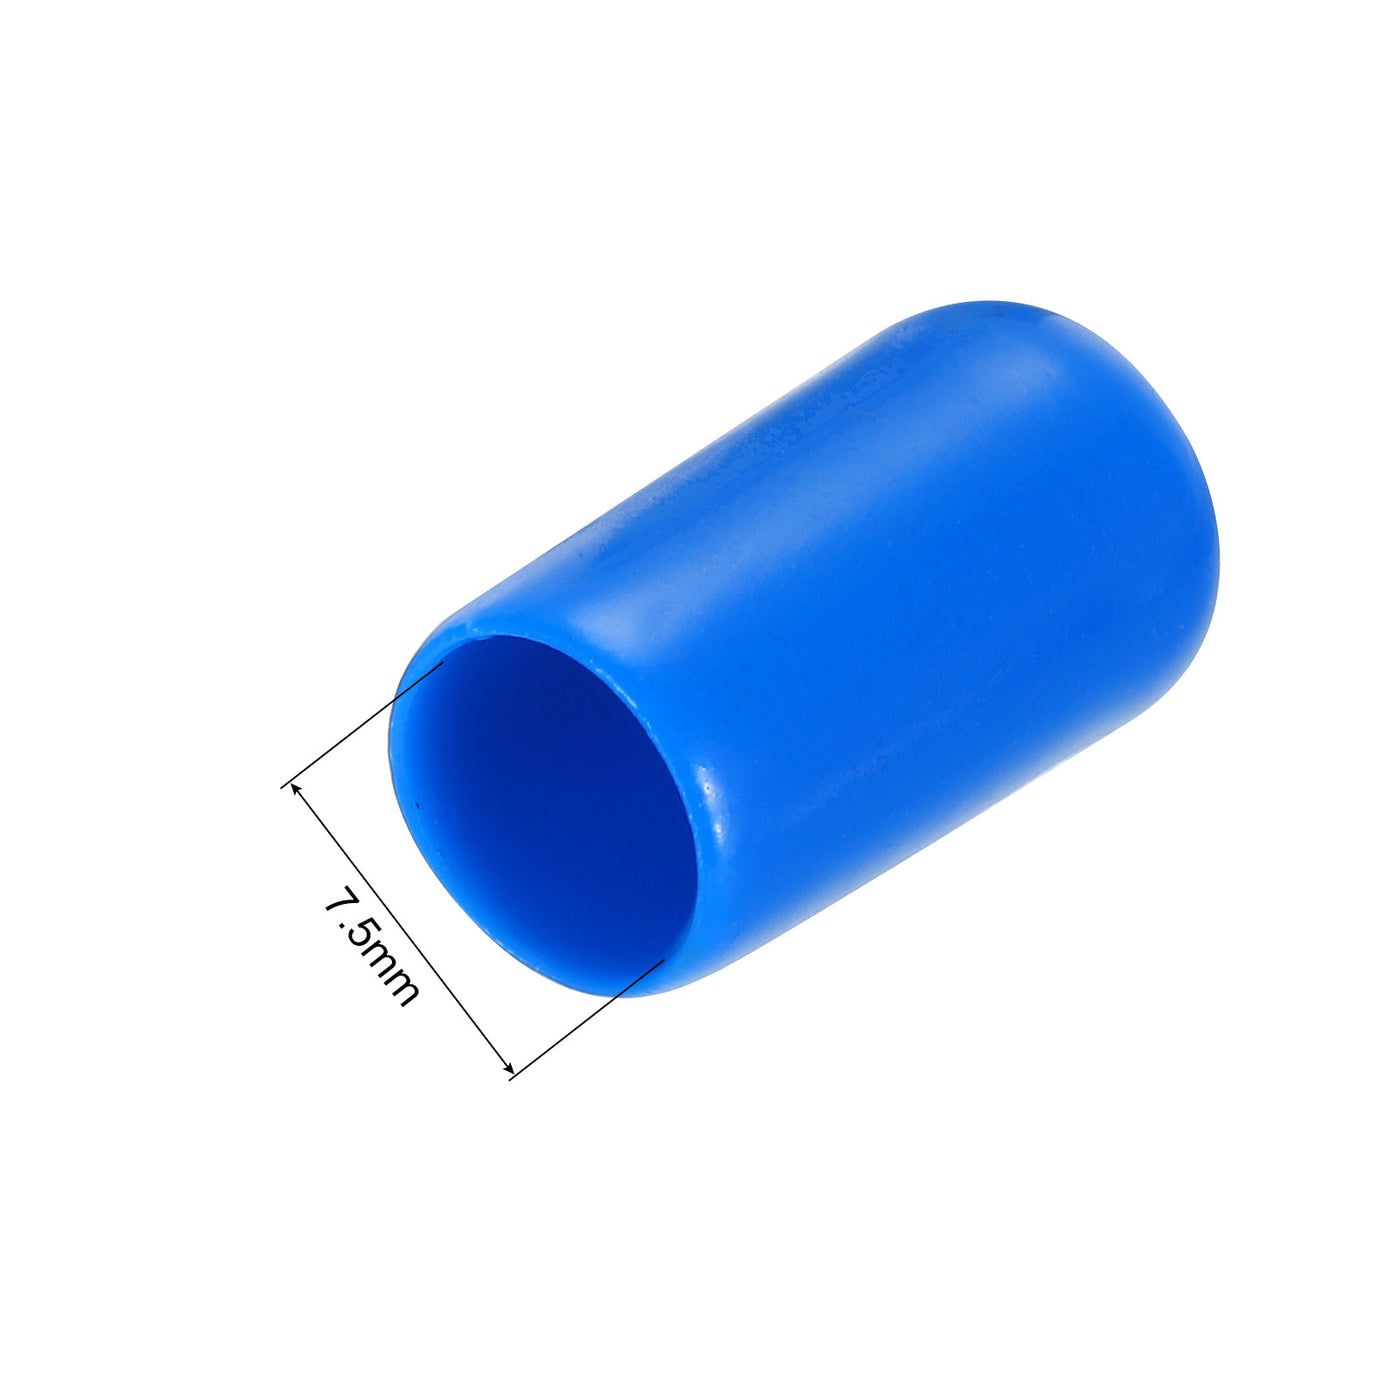 uxcell Uxcell 50pcs Rubber End Caps 7.5mm ID Vinyl PVC Round Tube Bolt Cap Cover Screw Thread Protectors Blue